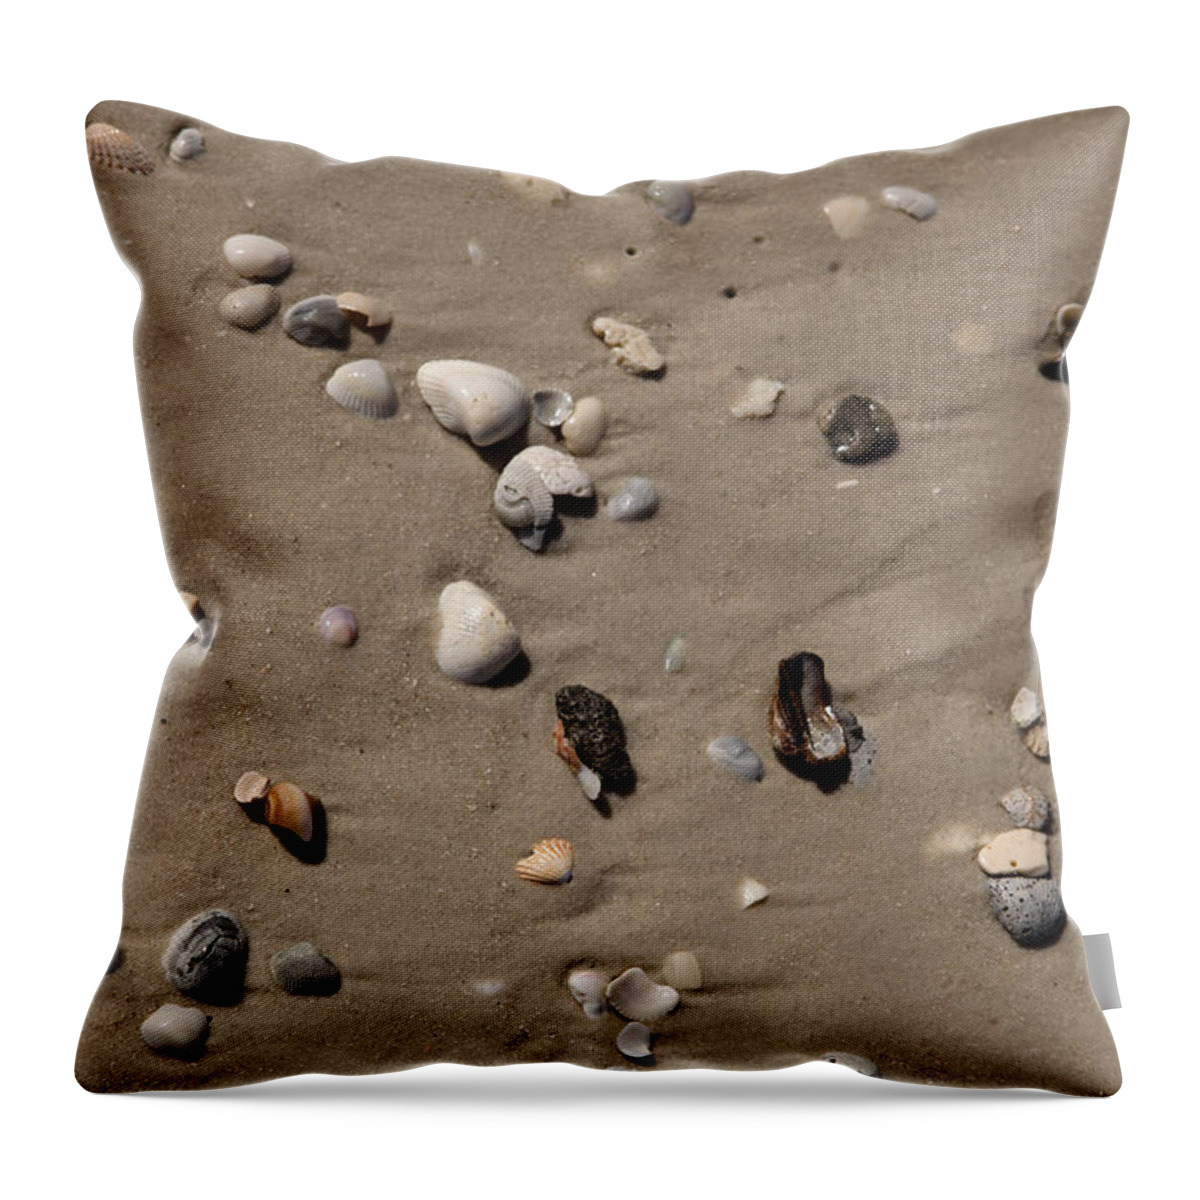 Texture Throw Pillow featuring the photograph Beach 1121 by Michael Fryd